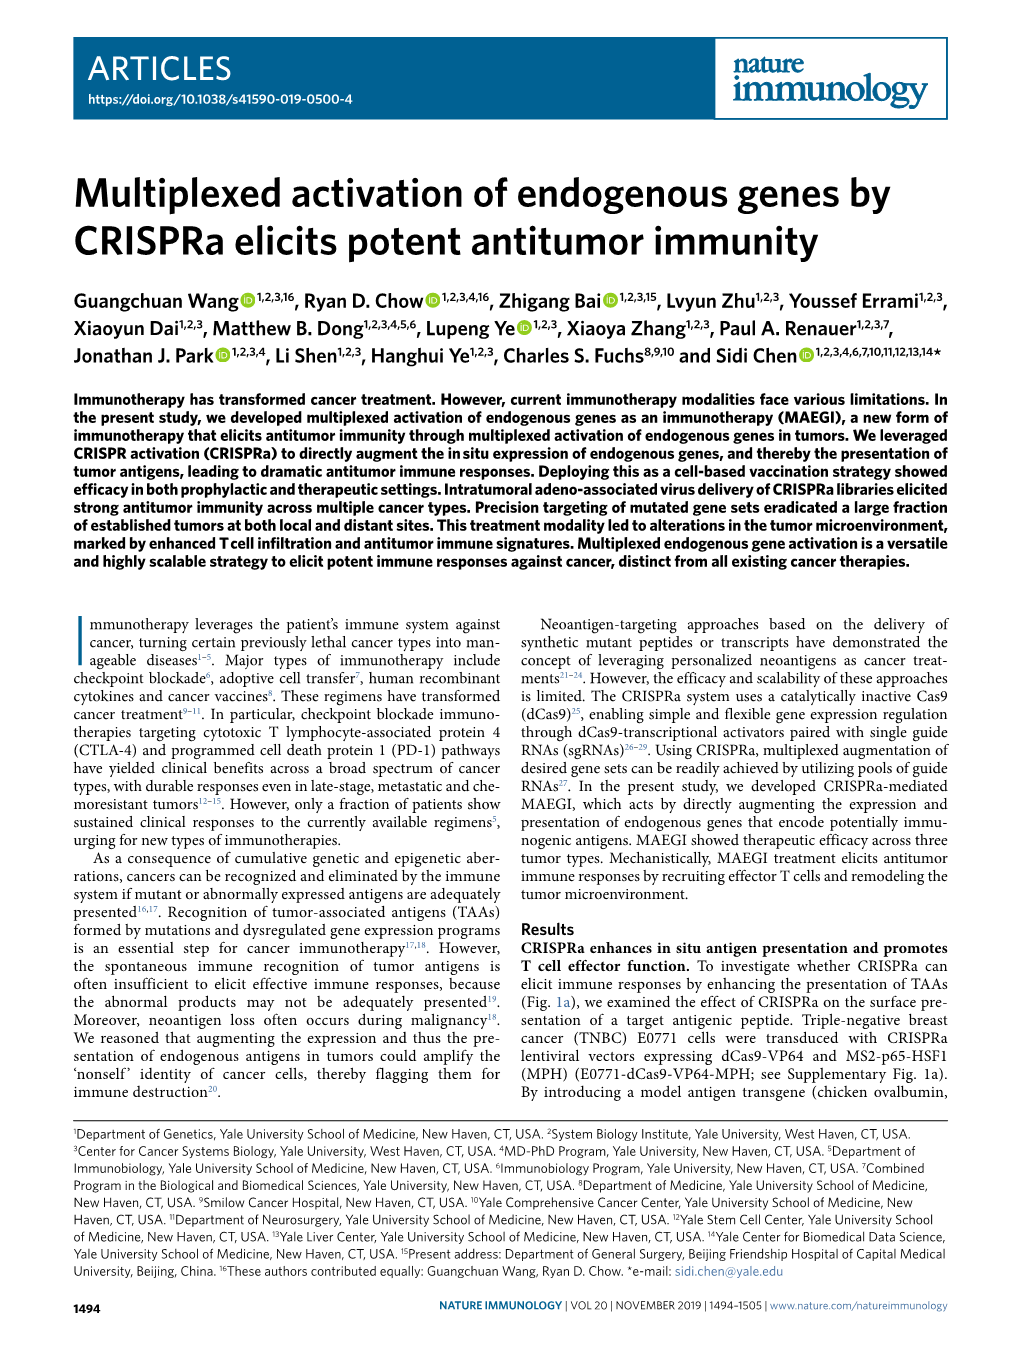 Multiplexed Activation of Endogenous Genes by Crispra Elicits Potent Antitumor Immunity